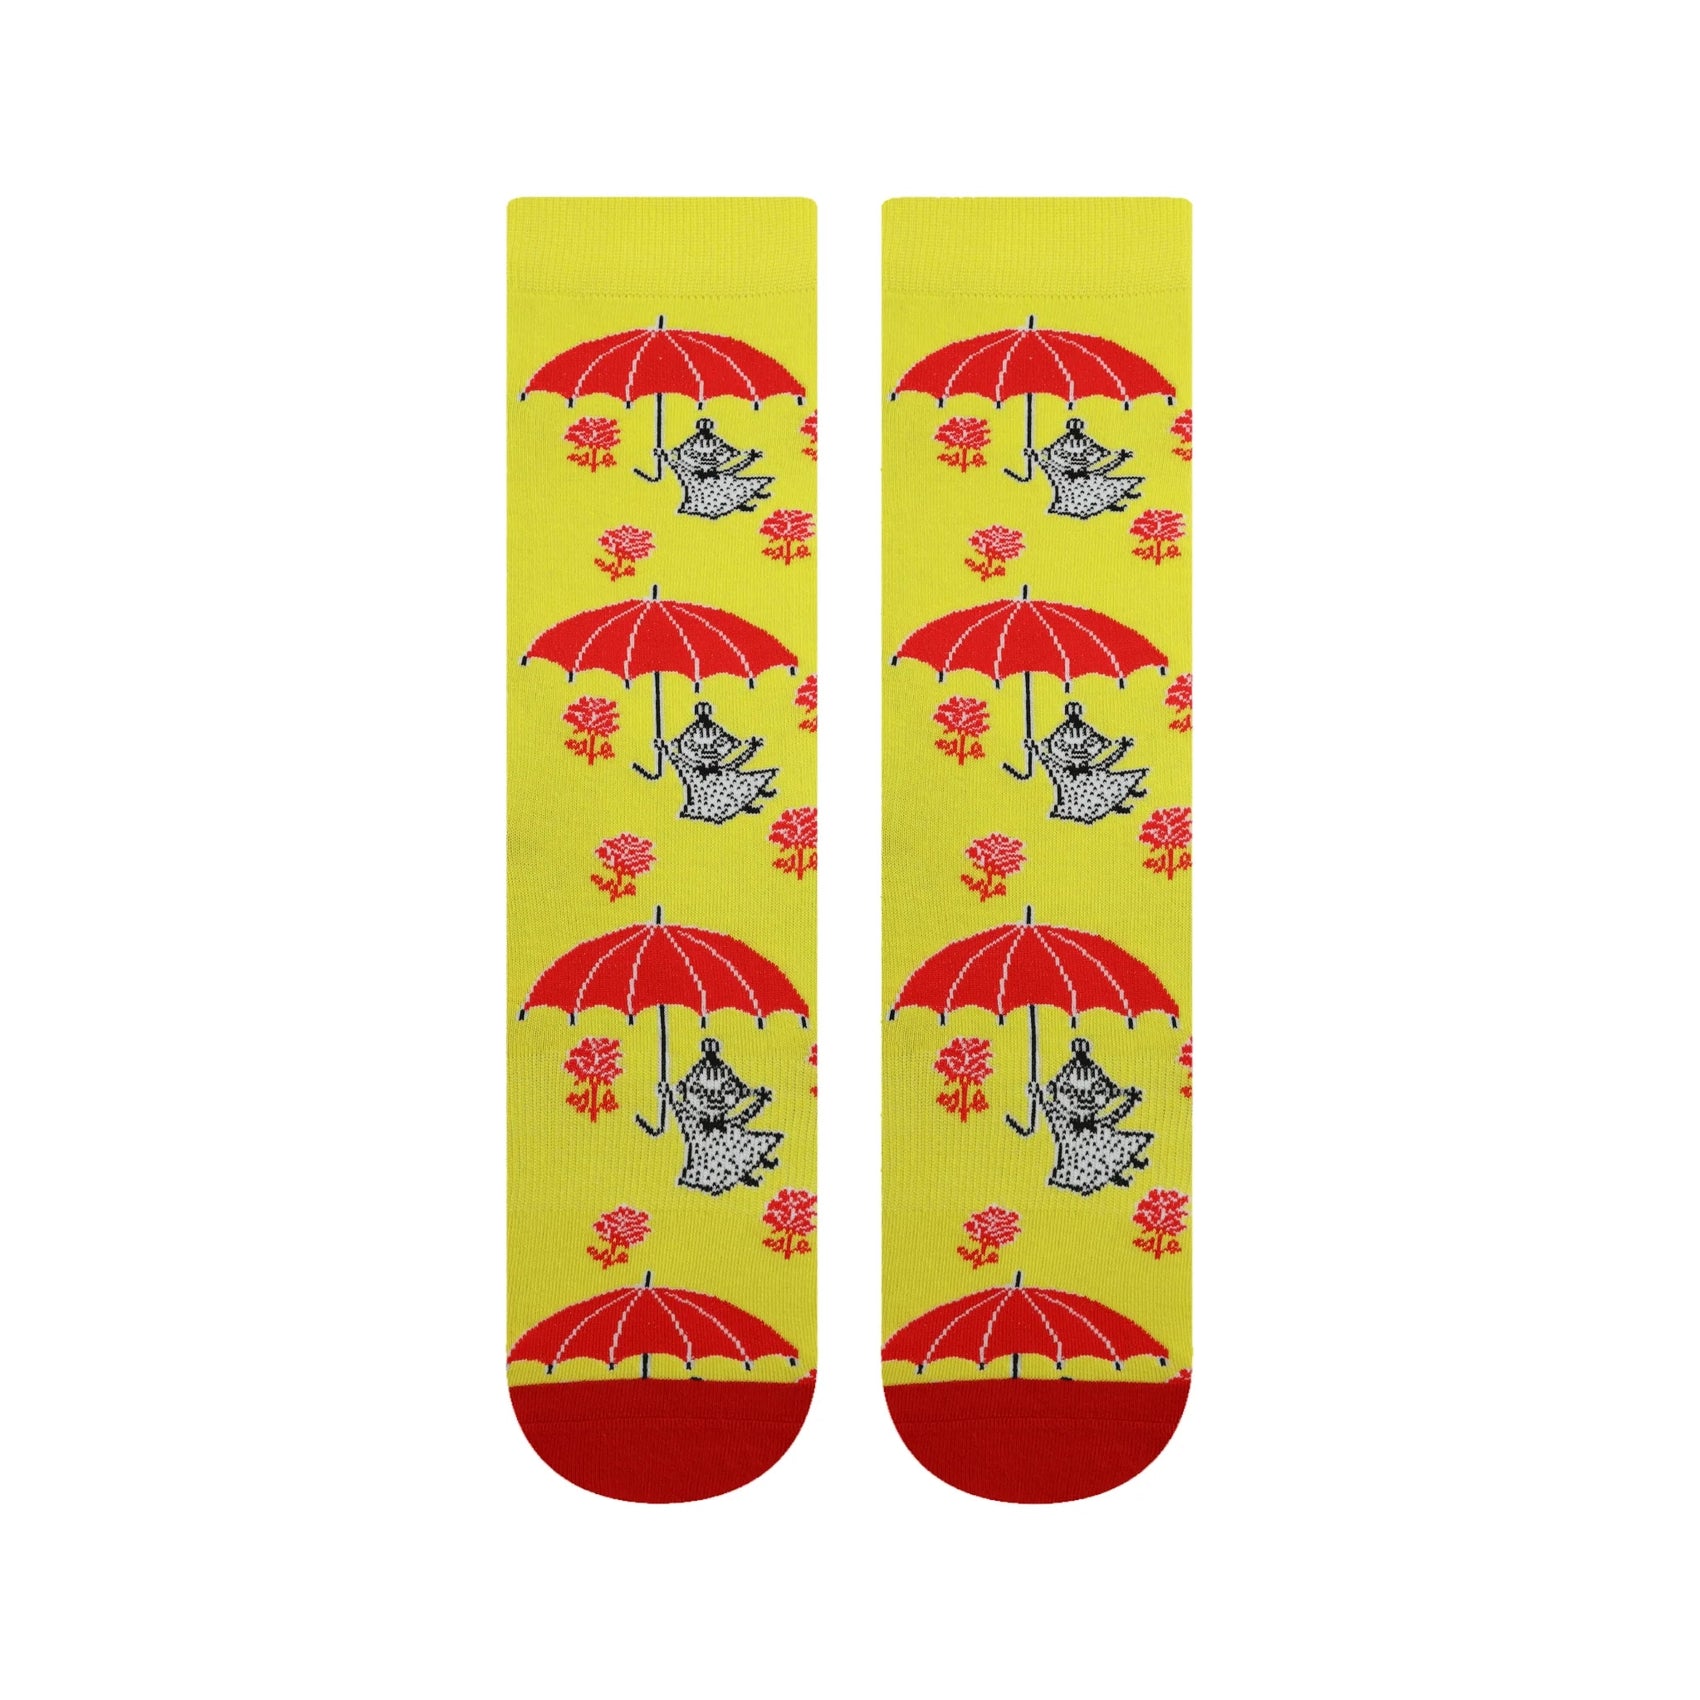 The Moomintrolls Nvrlnd Socks, Little My Umbrella - Pair